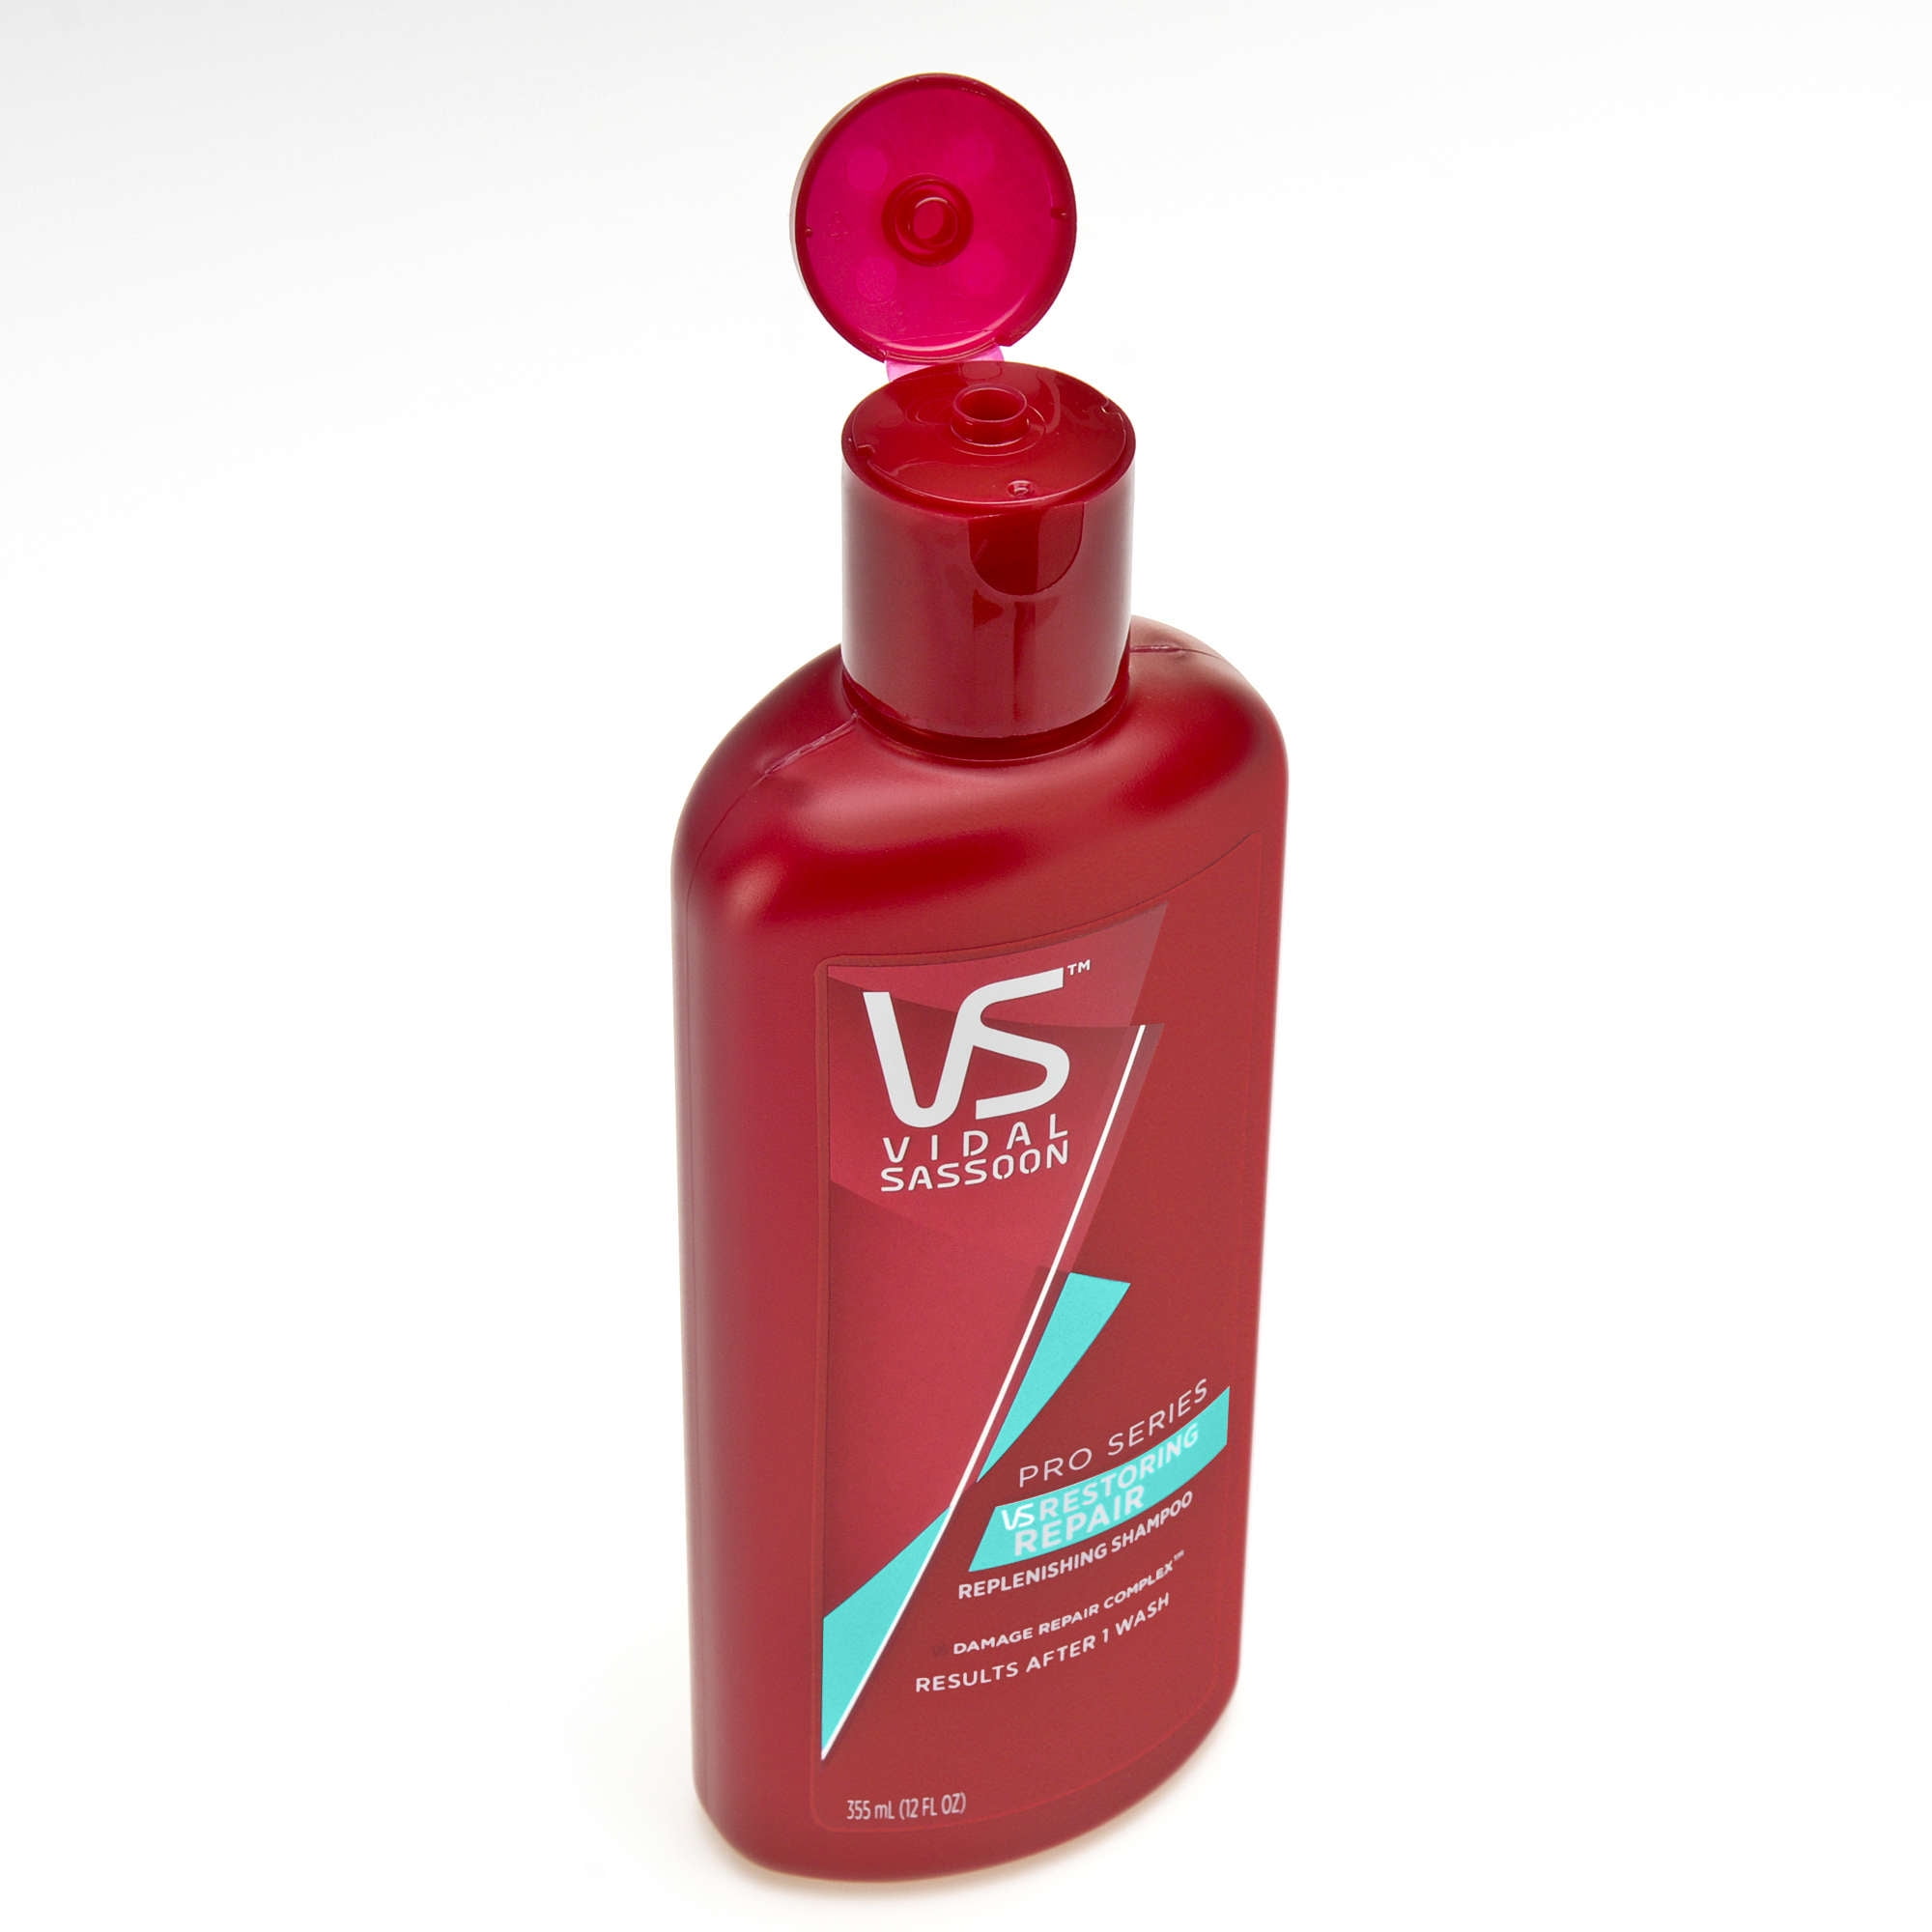 Vidal Pro Series Repair Shampoo fl oz - Walmart.com